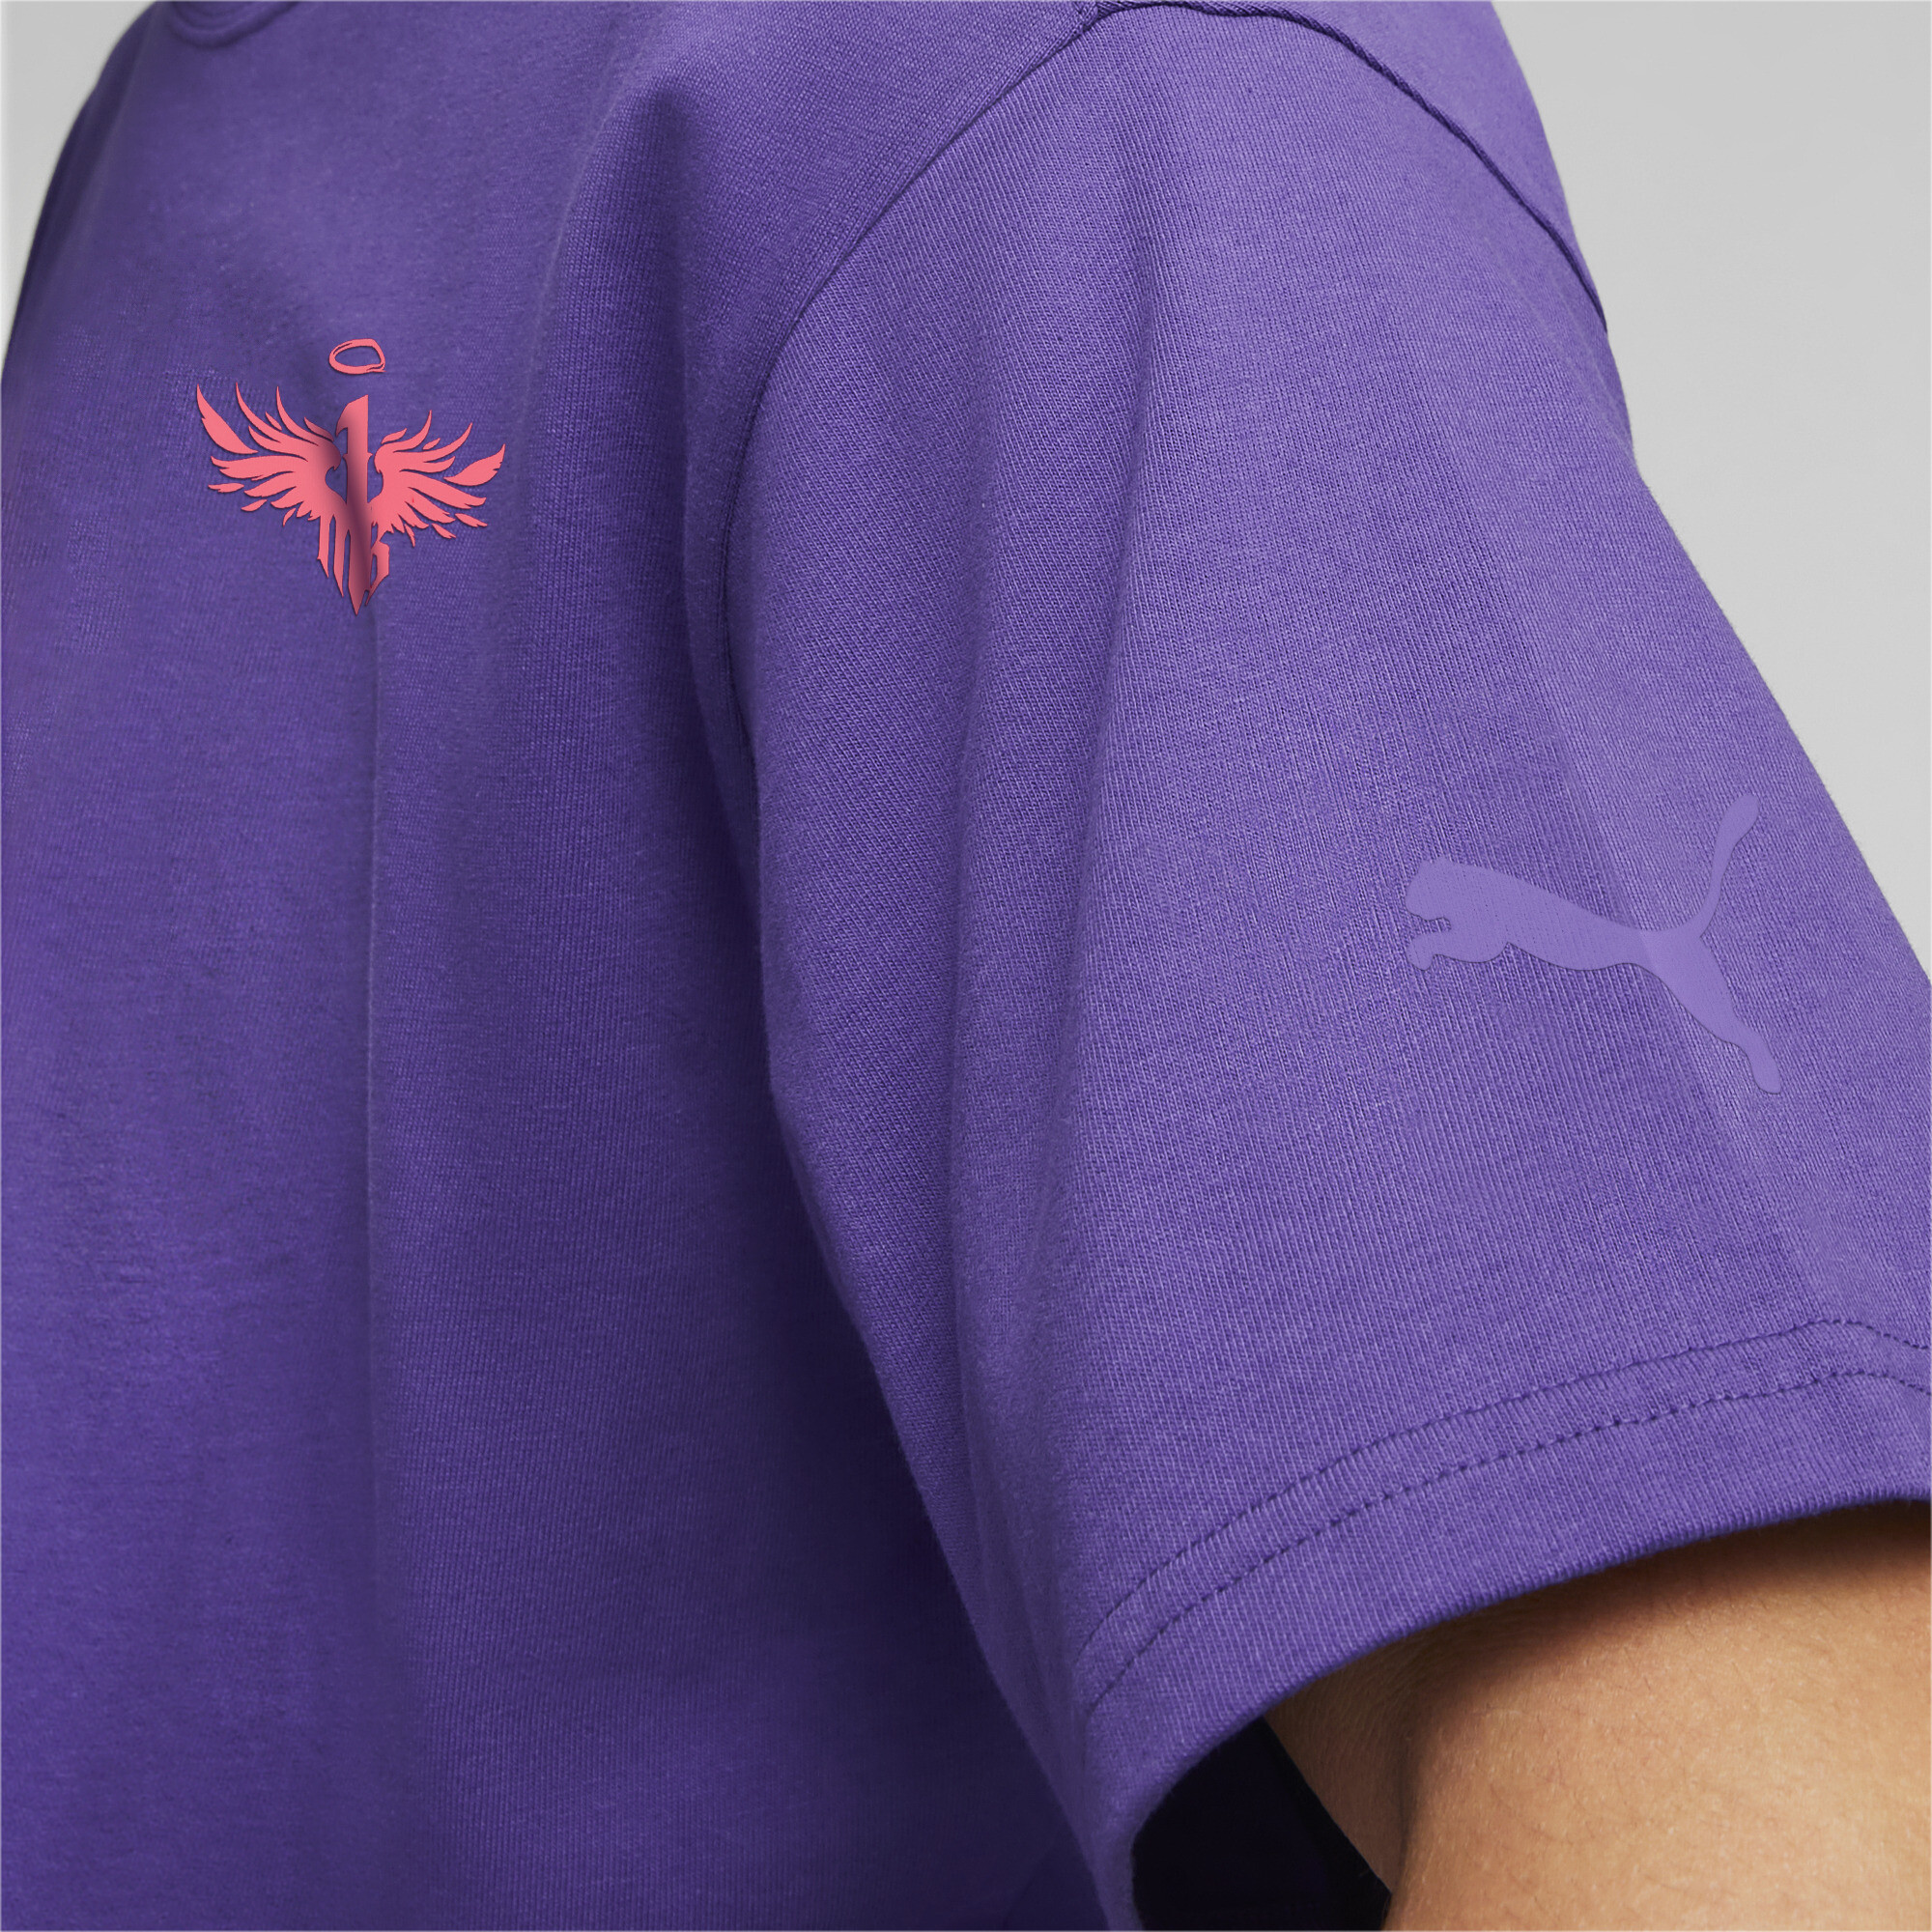 Men's PUMA MELO X TOXIC Basketball T-Shirt In Purple, Size XL